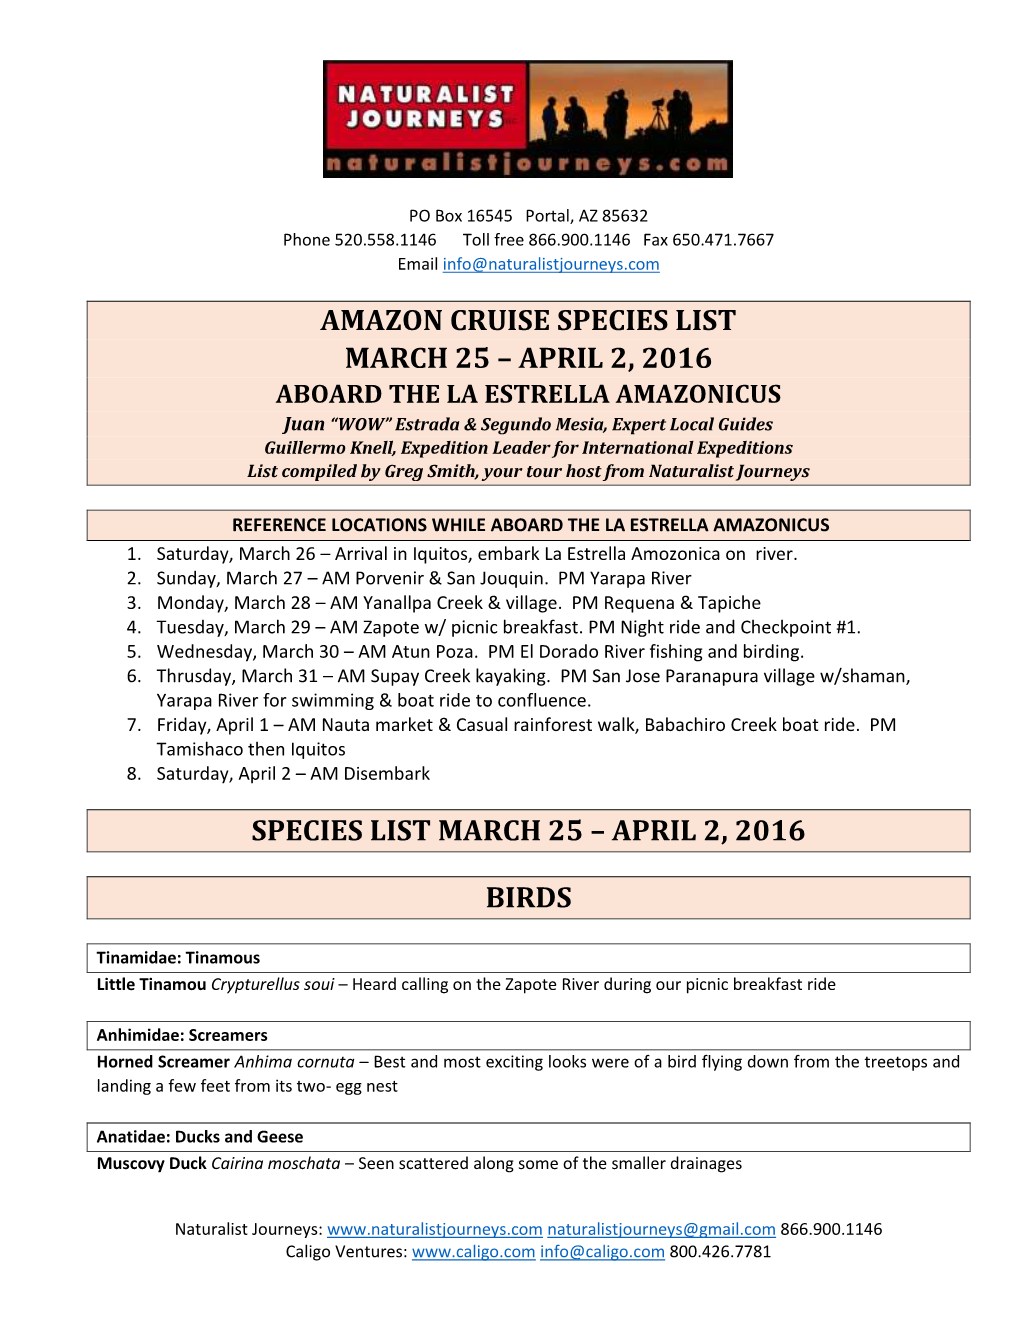 April 2, 2016 Species List March 25